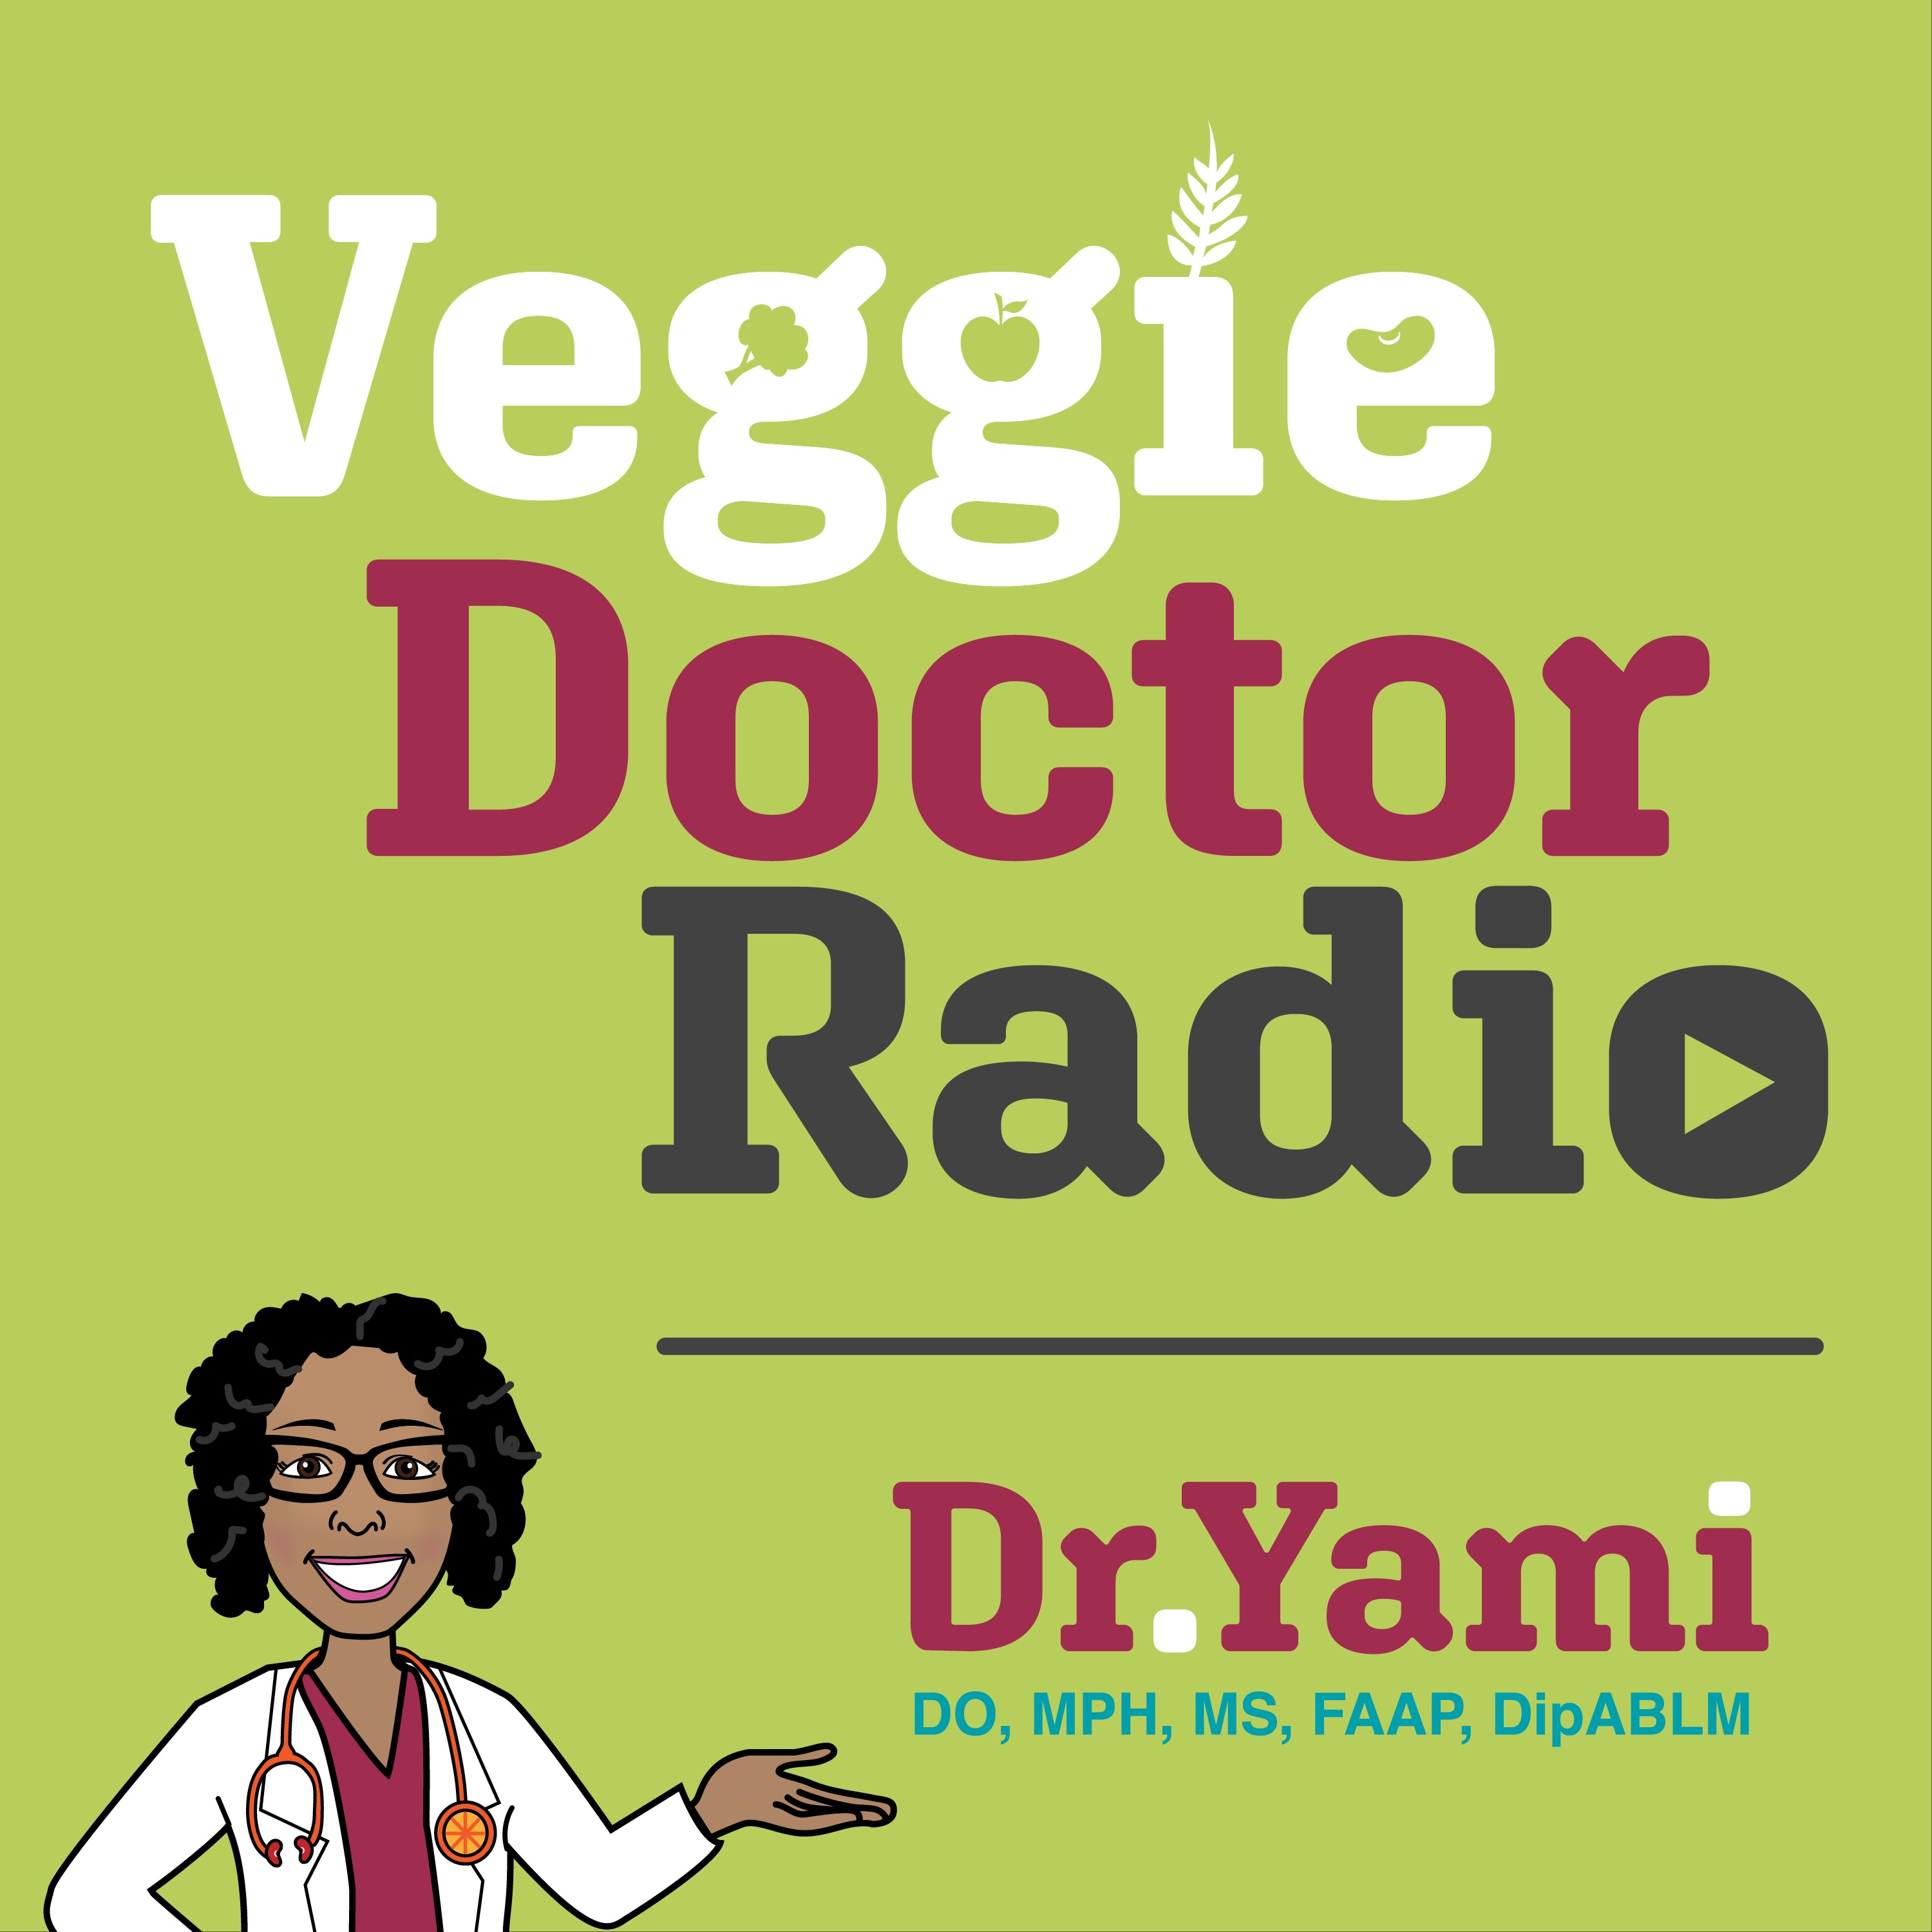 130: Vegan Chef Lauren Kretzer on Raising Vegan Children and Her Tips for Stressed Parents (Veggie Doctor Radio)